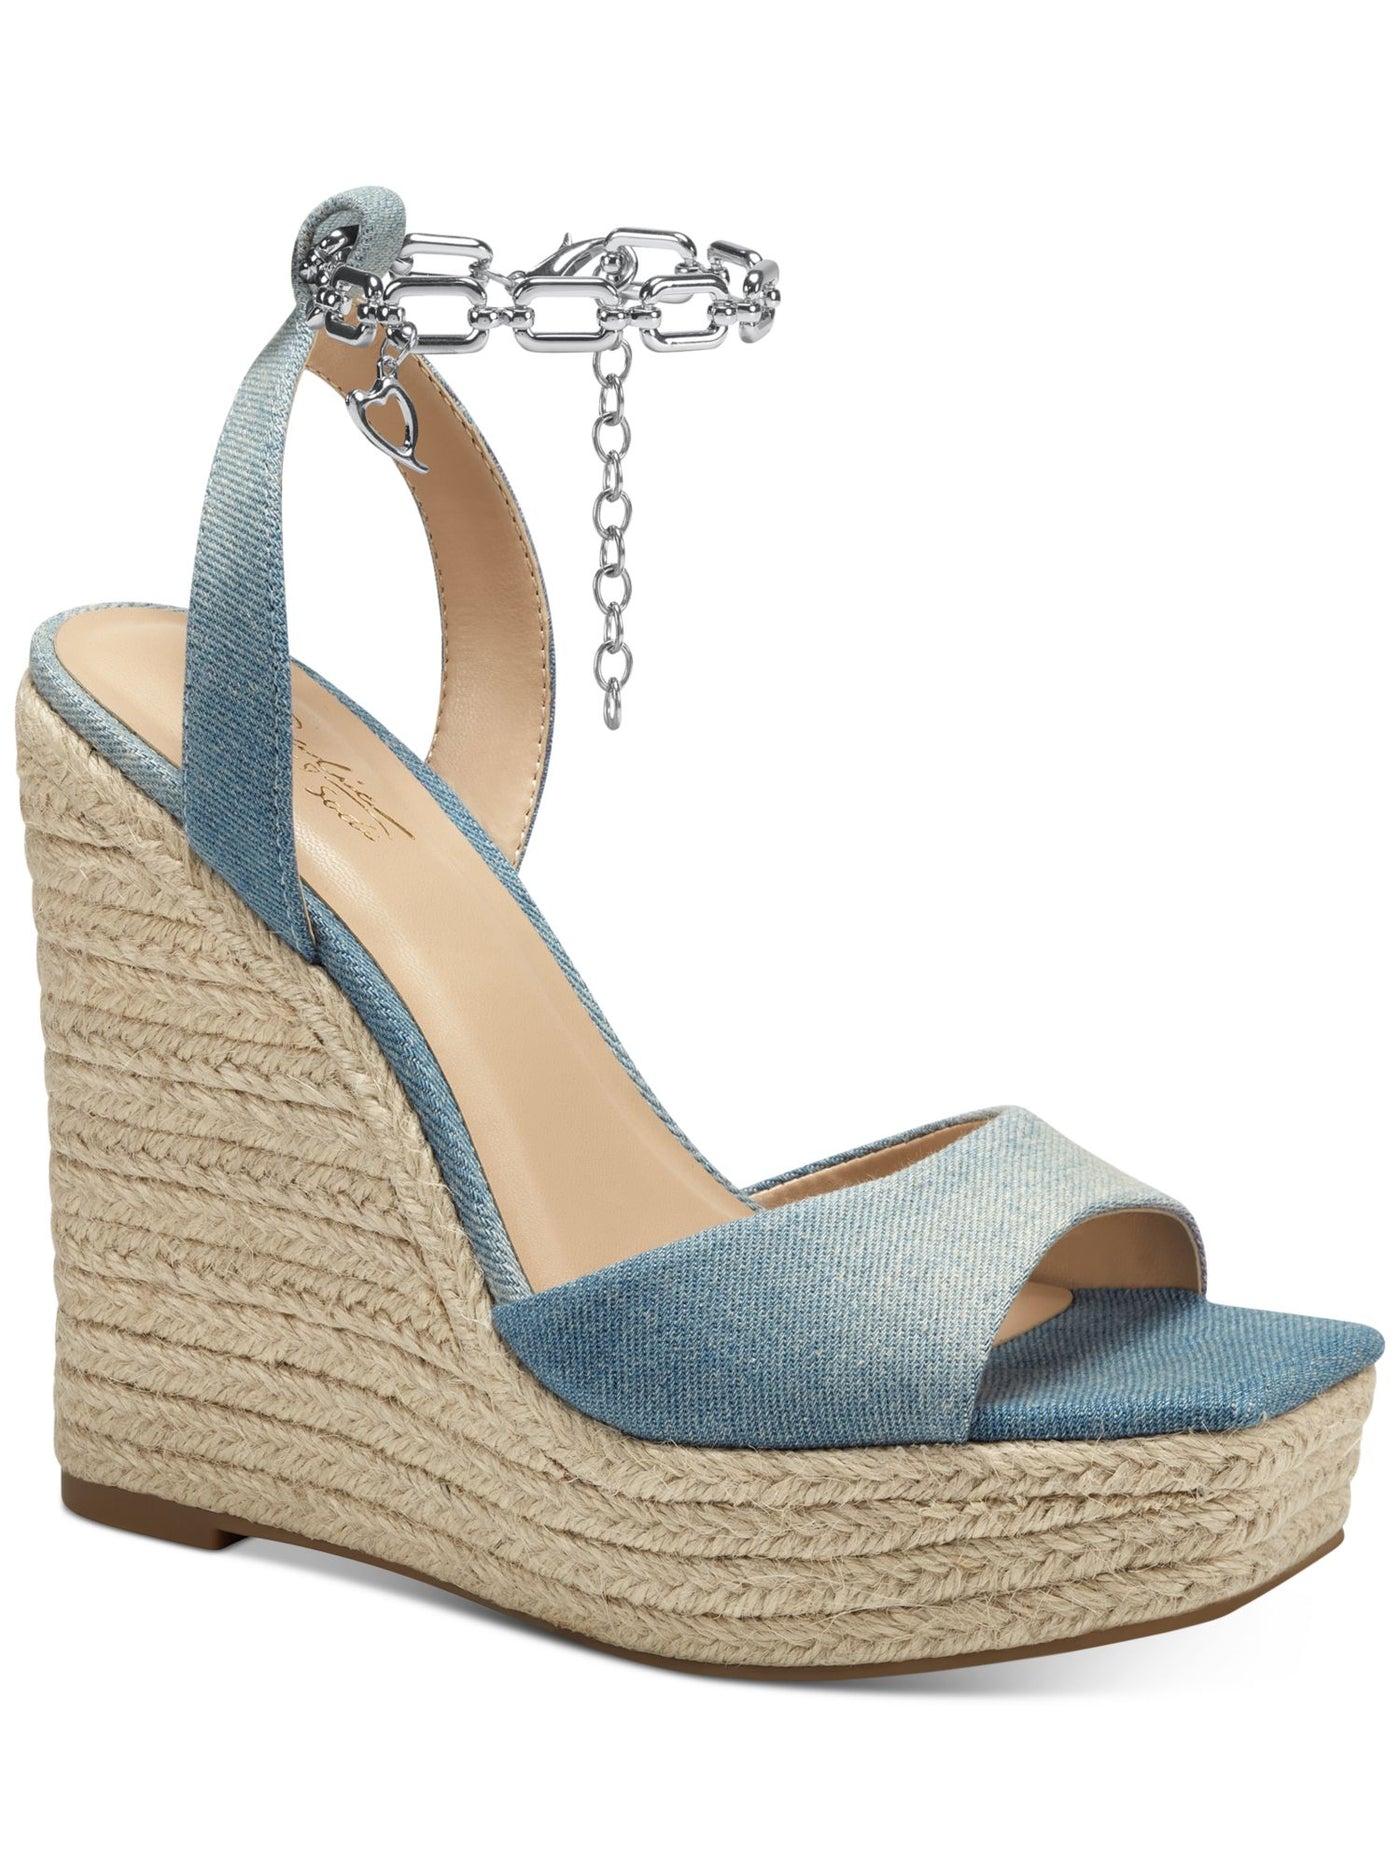 THALIA SODI Womens Blue Denim Clasp Chain 1-1/2" Platform Ankle Strap Distressed Caden Square Toe Wedge Slip On Espadrille Shoes 6.5 M